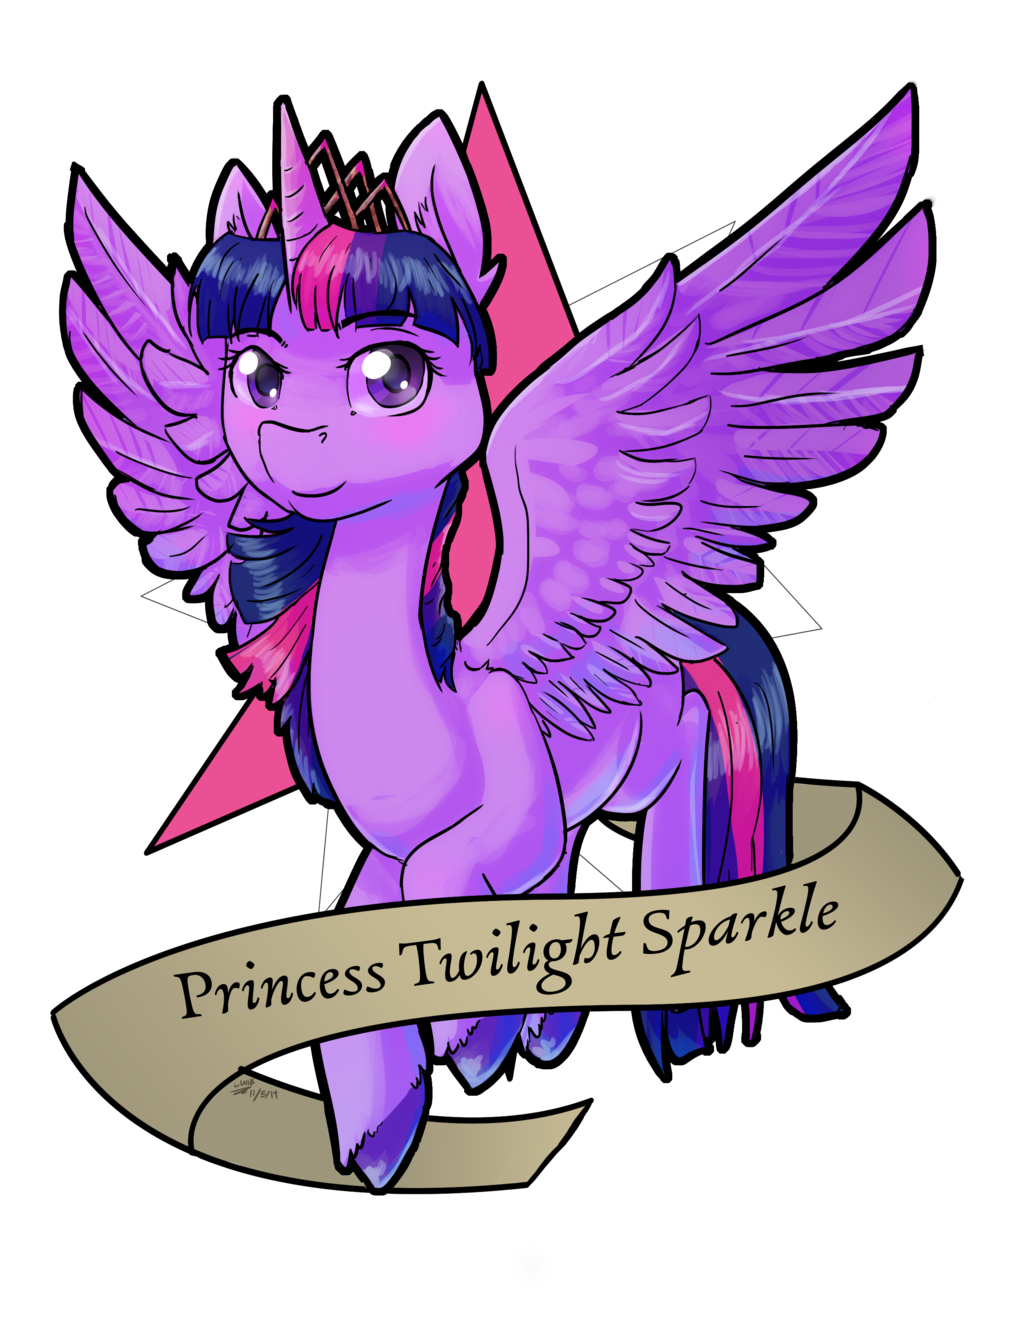 Most recent image: MLP: Princess Twilight